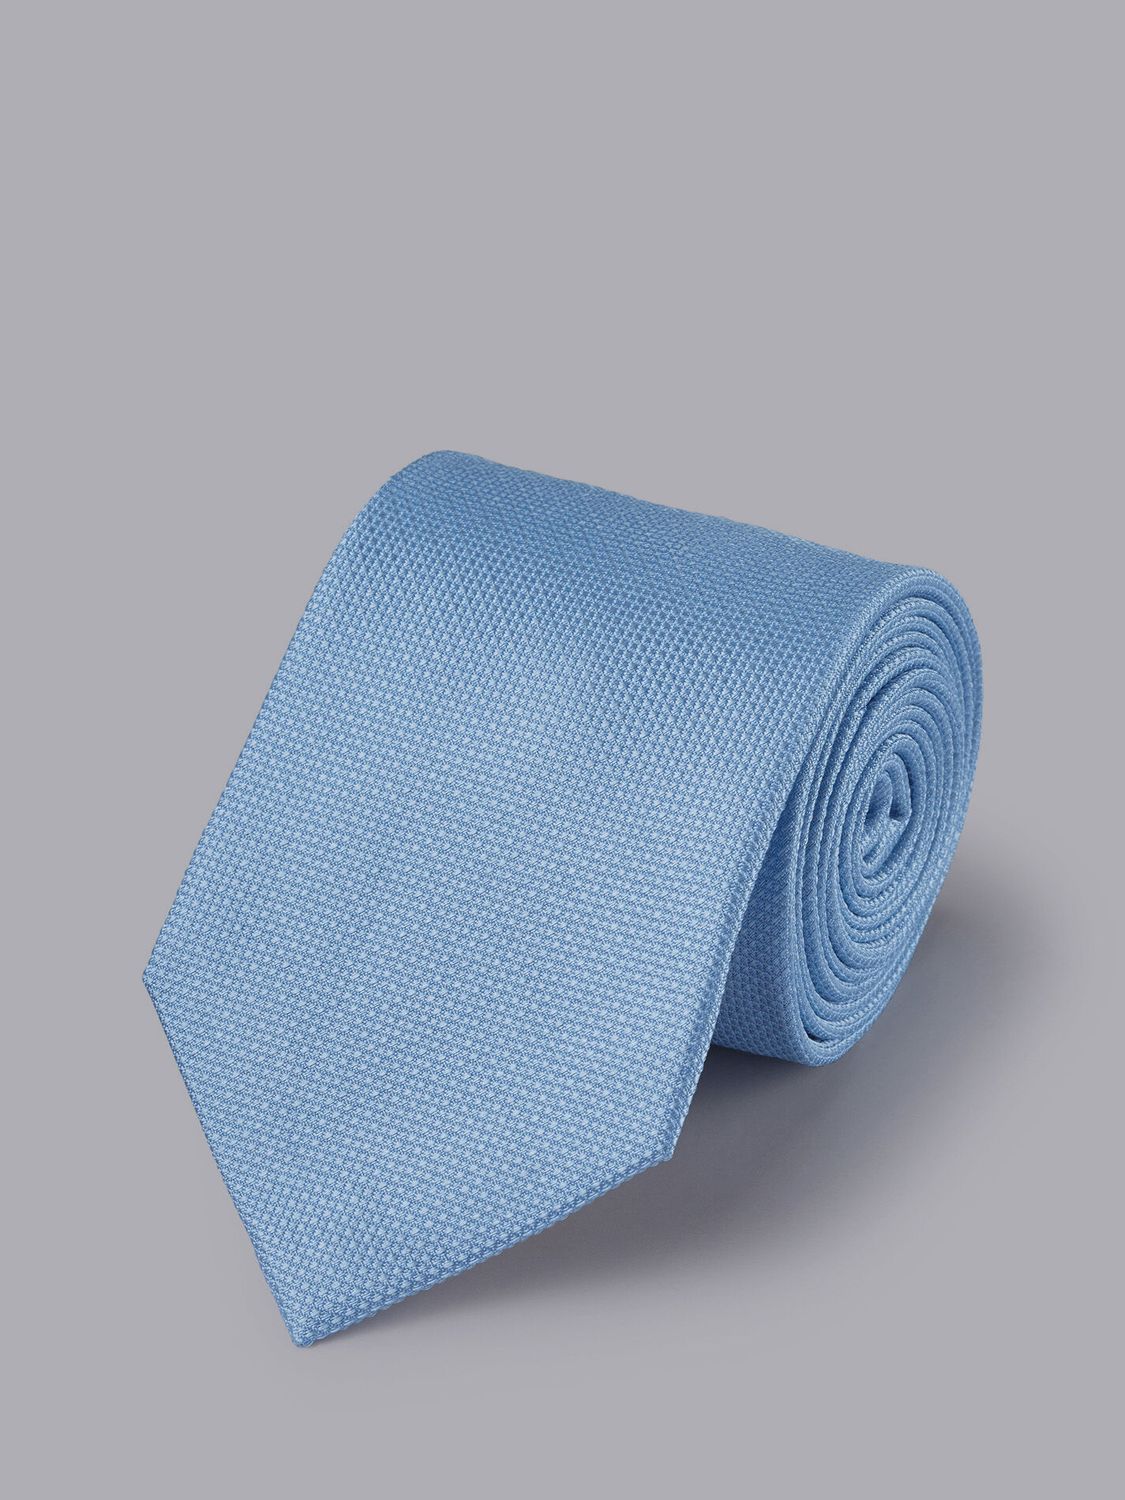 Charles Tyrwhitt Stain Resistant Silk Tie, Sky Blue at John Lewis ...